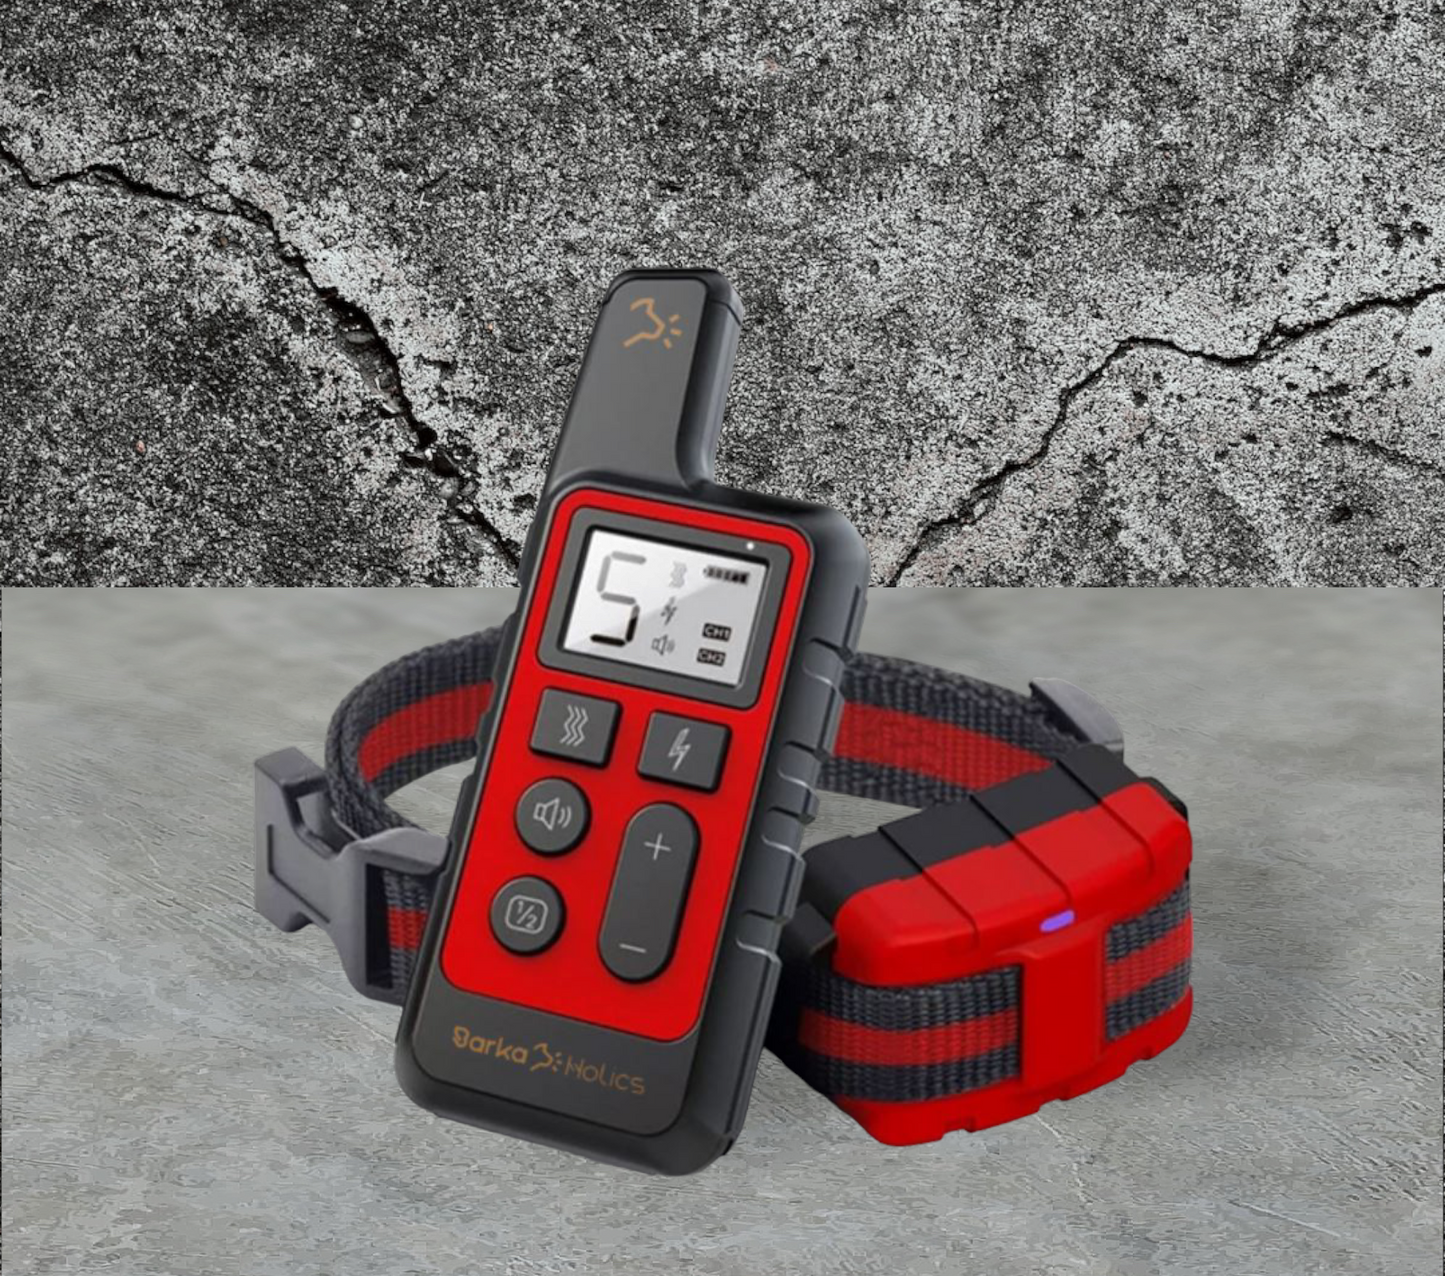 Remote Dog Training Shock Collar 500m 1-2 Dogs BH150R